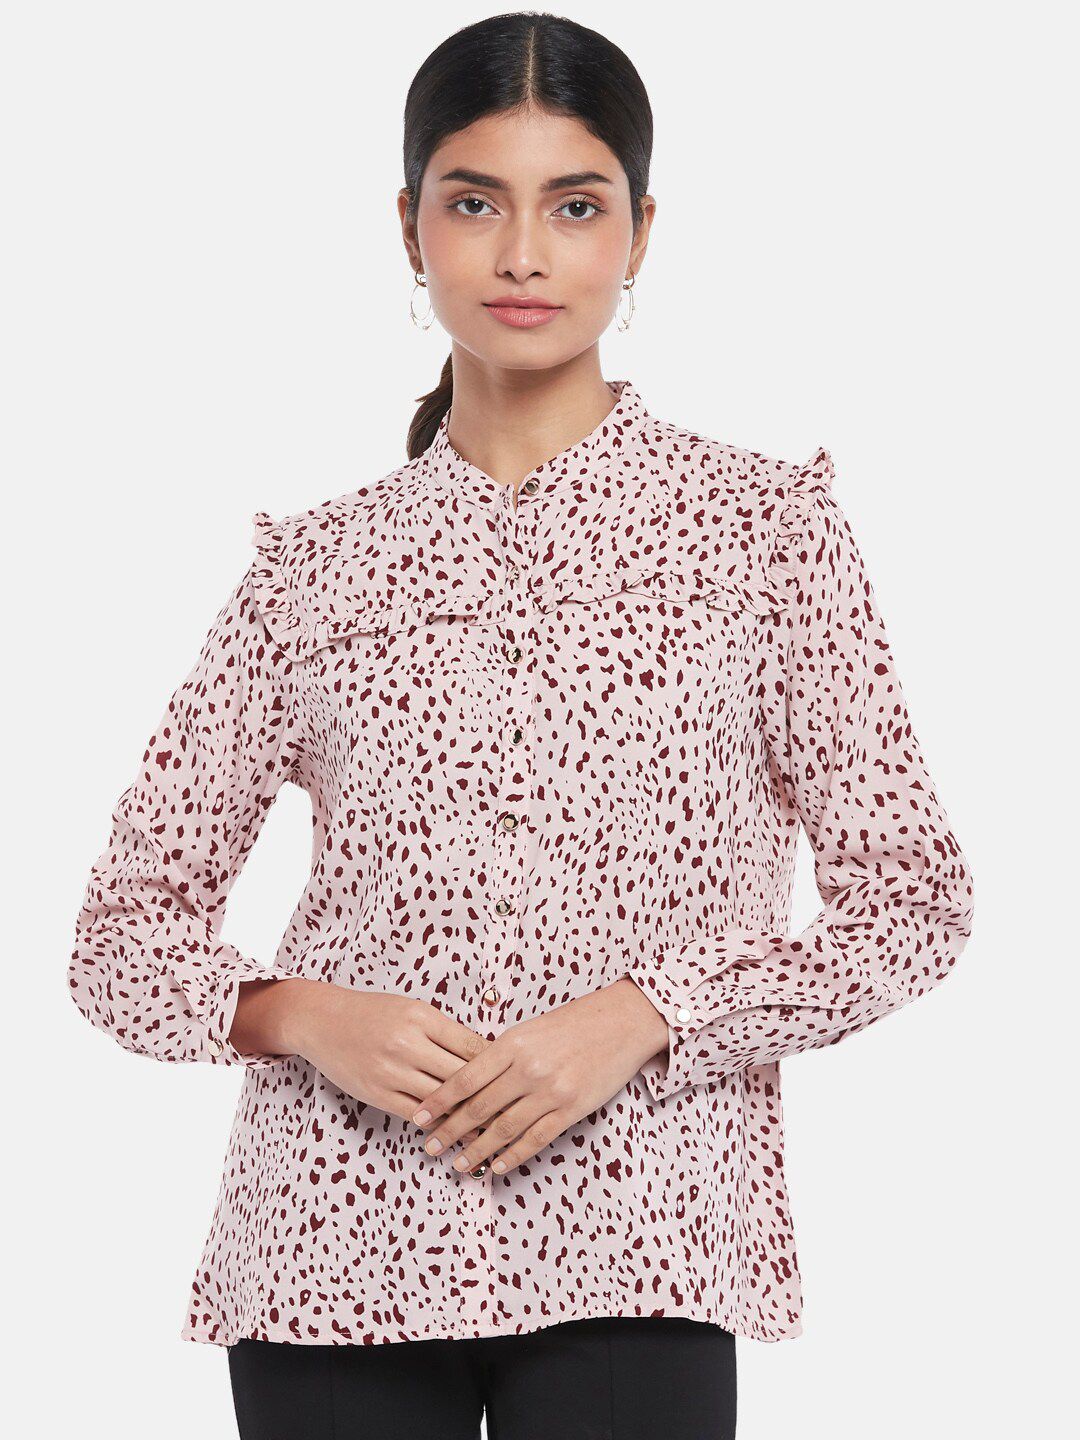 Annabelle by Pantaloons Pink & Black Animal Print Mandarin Collar Shirt Style Top Price in India